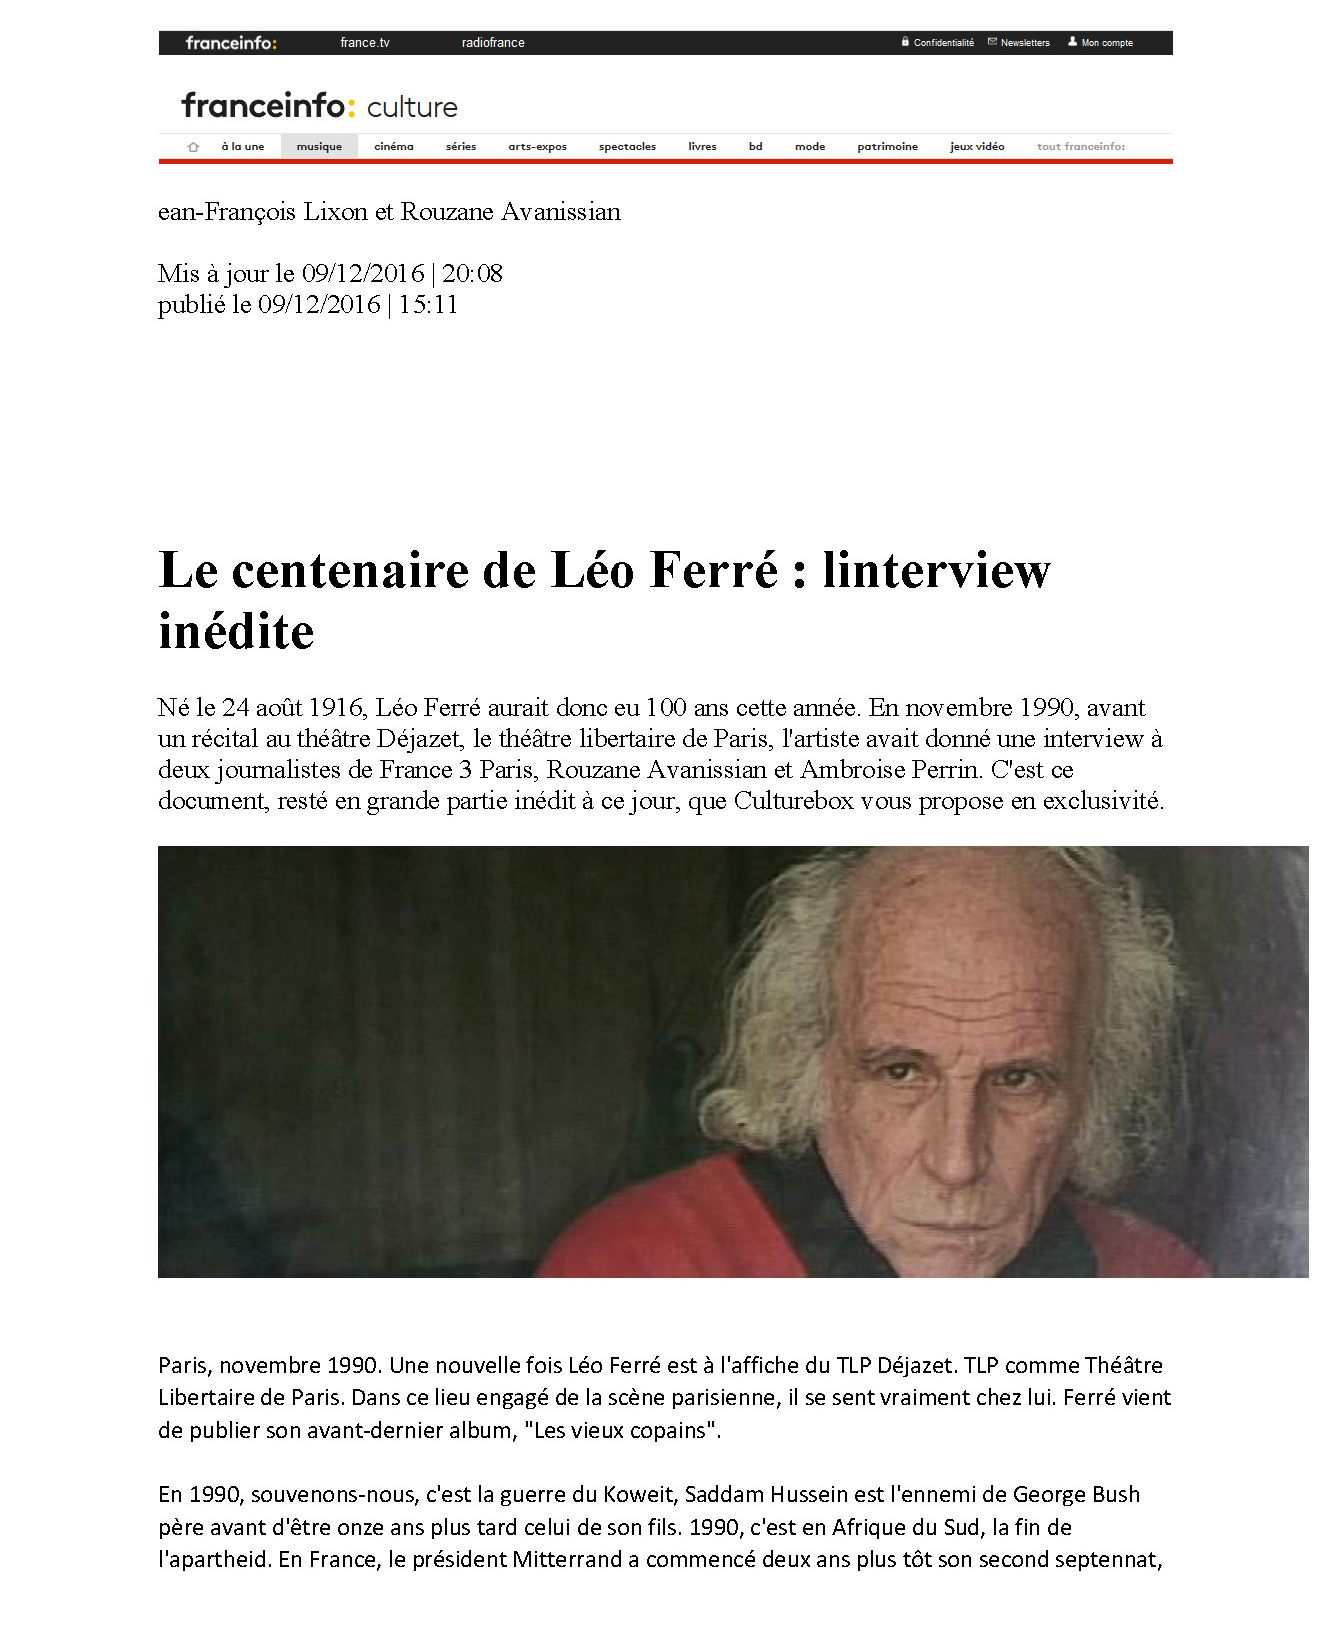 09/12/2016 Franceinfo L'interview inédite